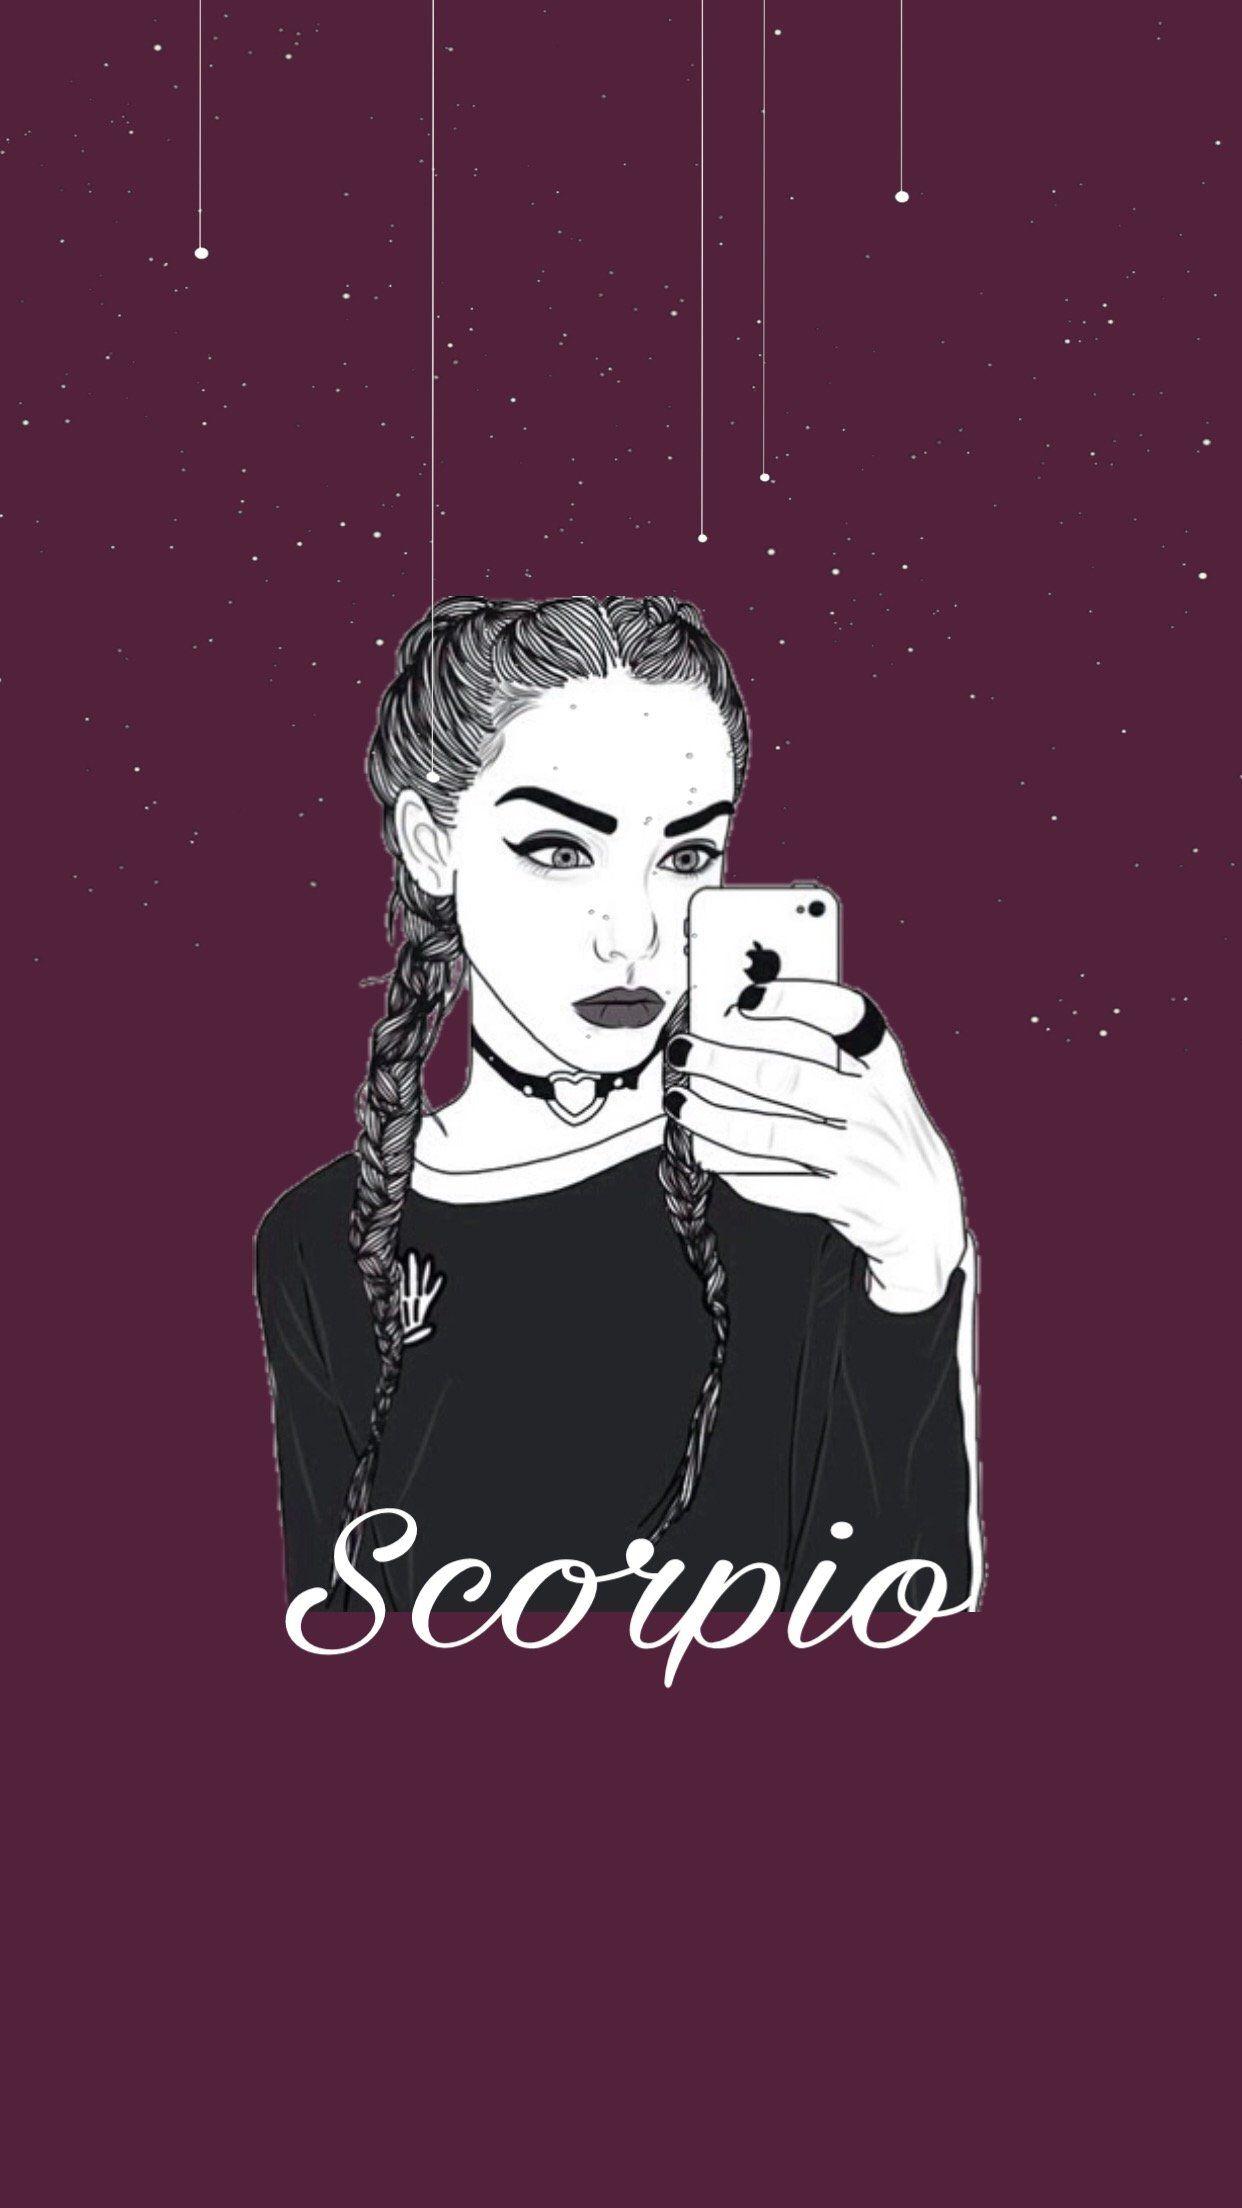 Scorpio - Zodiac - Image by dookoco11 #1026713 - Zerochan Anime Image Board